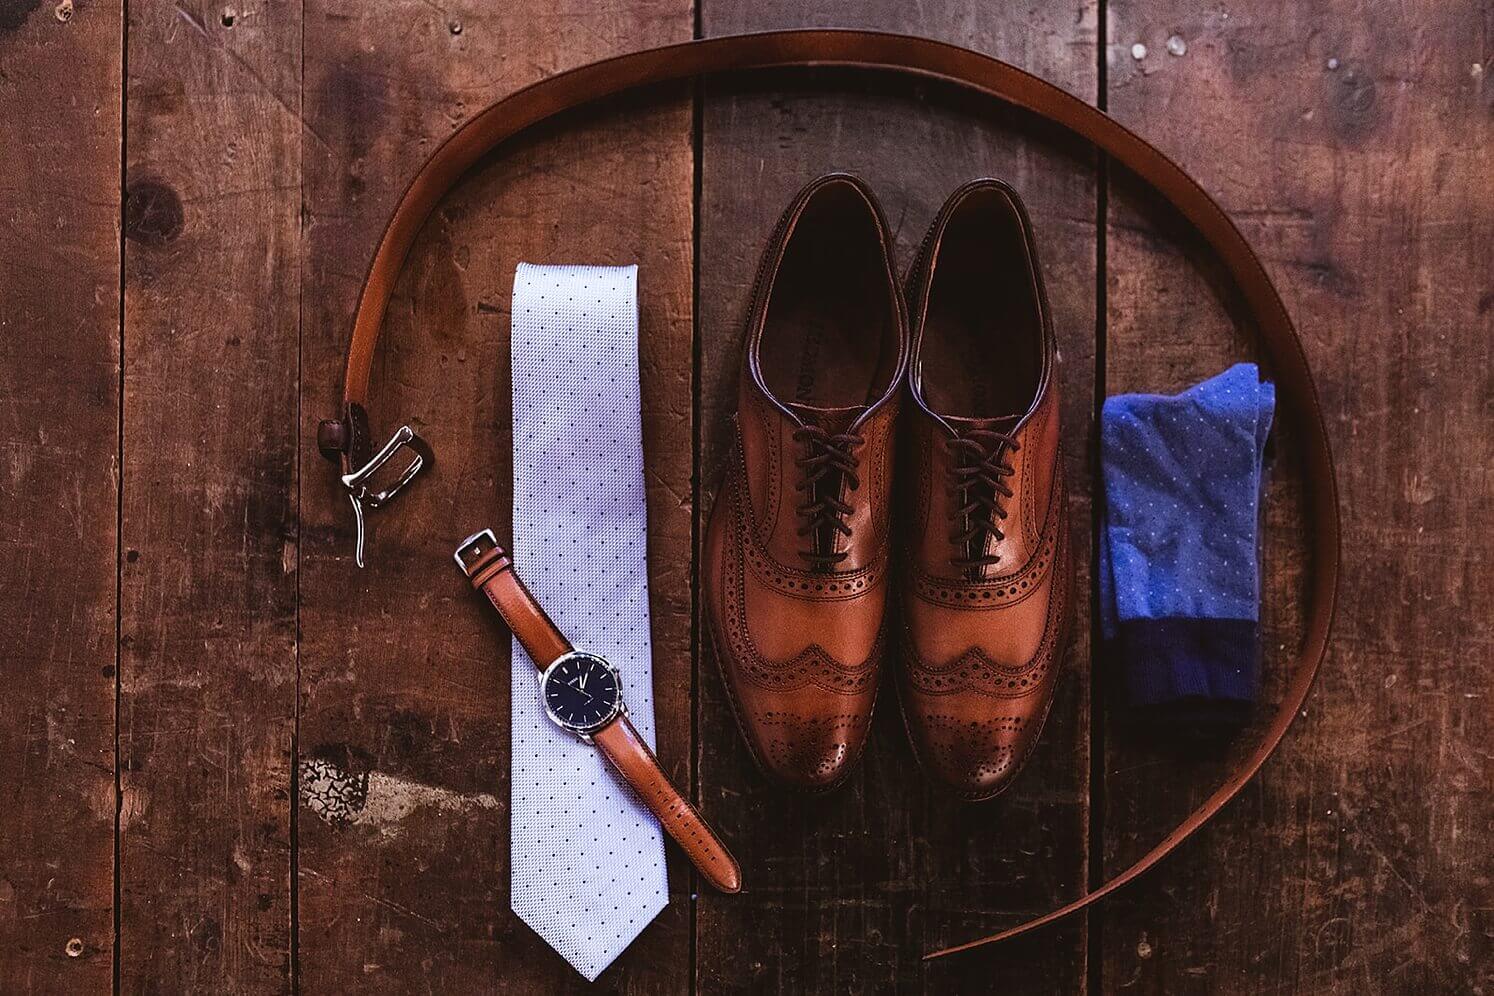 Groom's shoes, tie, watch, and belt